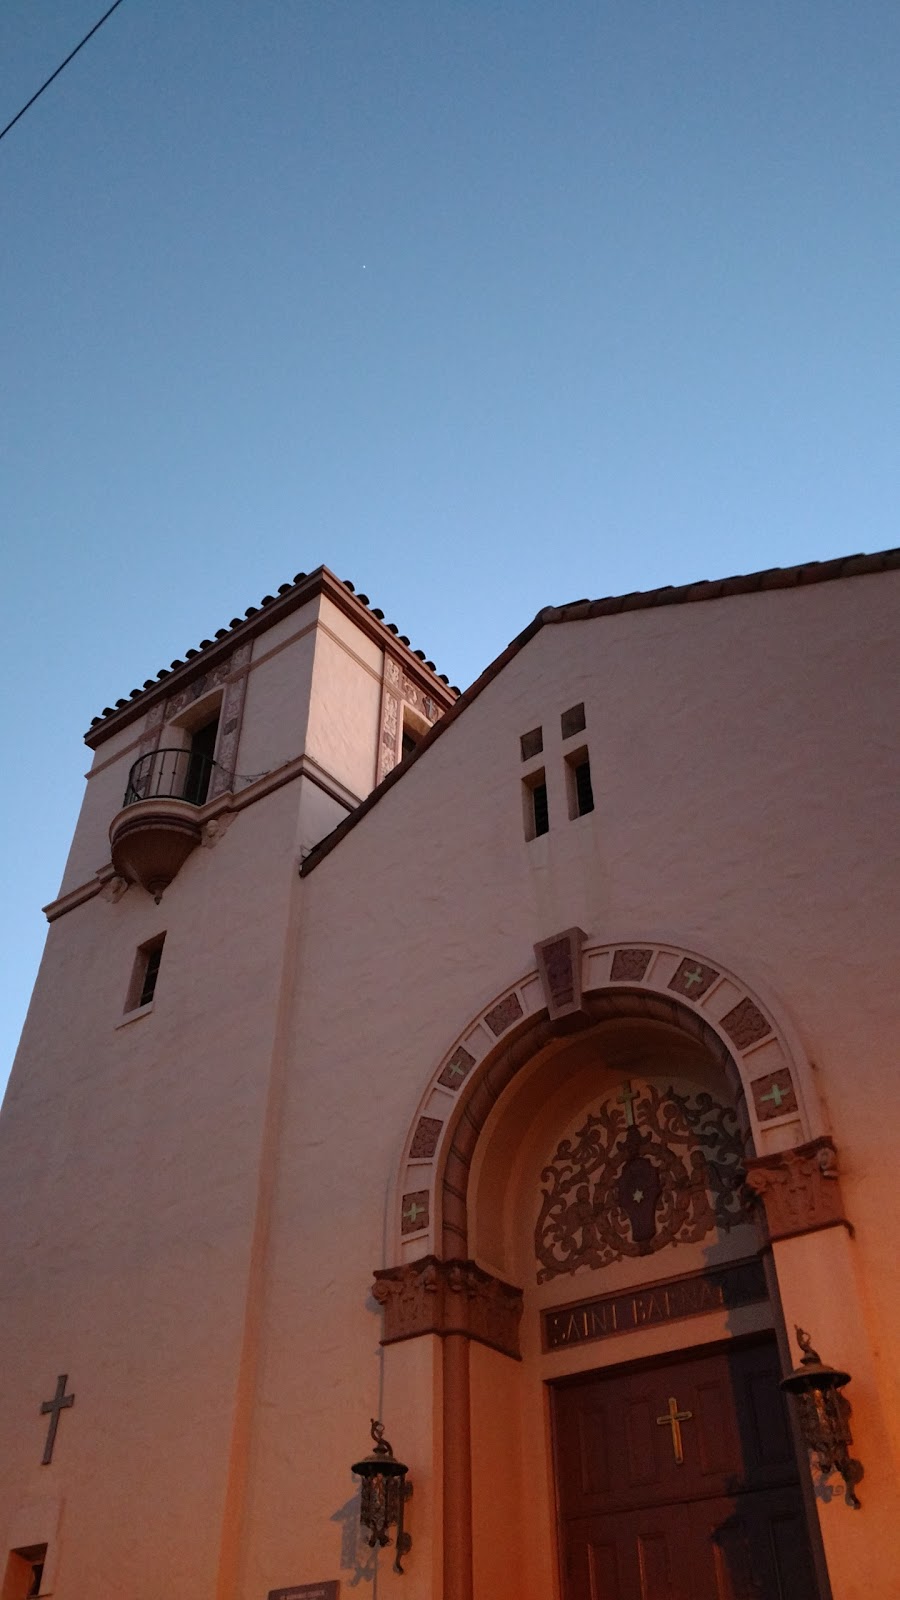 St Barnabas Catholic Church | 1427 6th St, Alameda, CA 94501, USA | Phone: (510) 522-8933